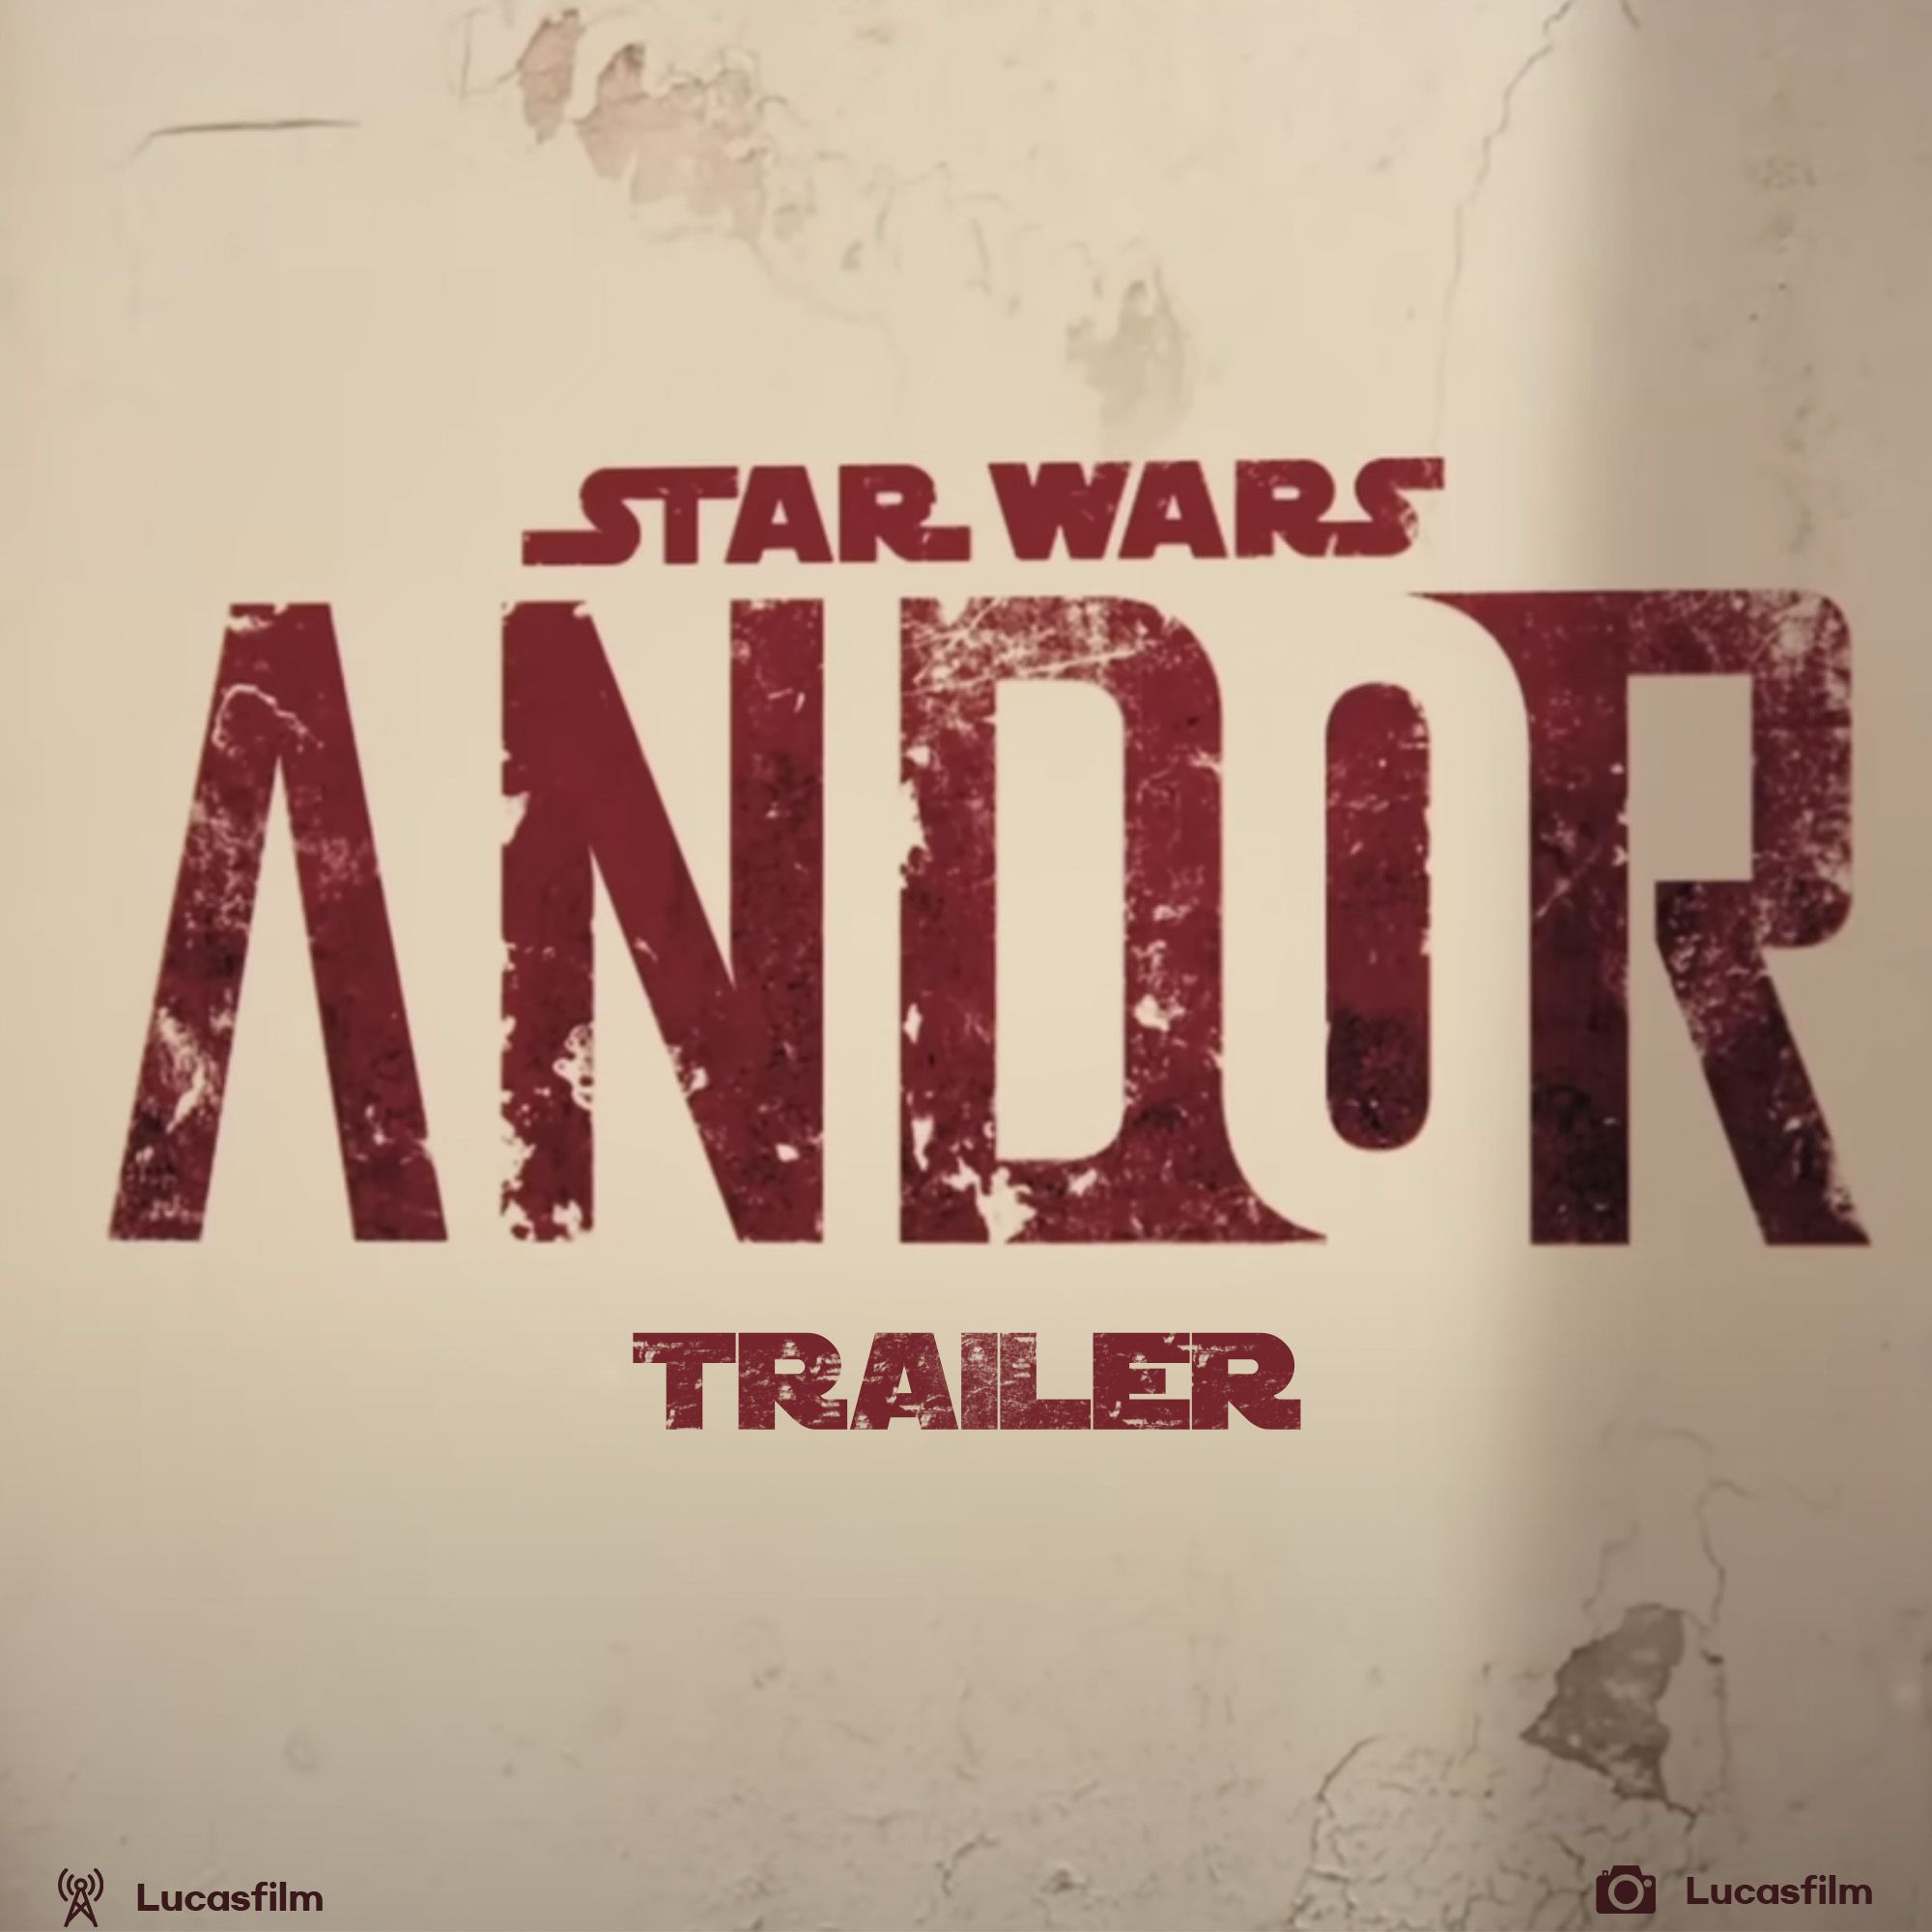 Andor trailer released